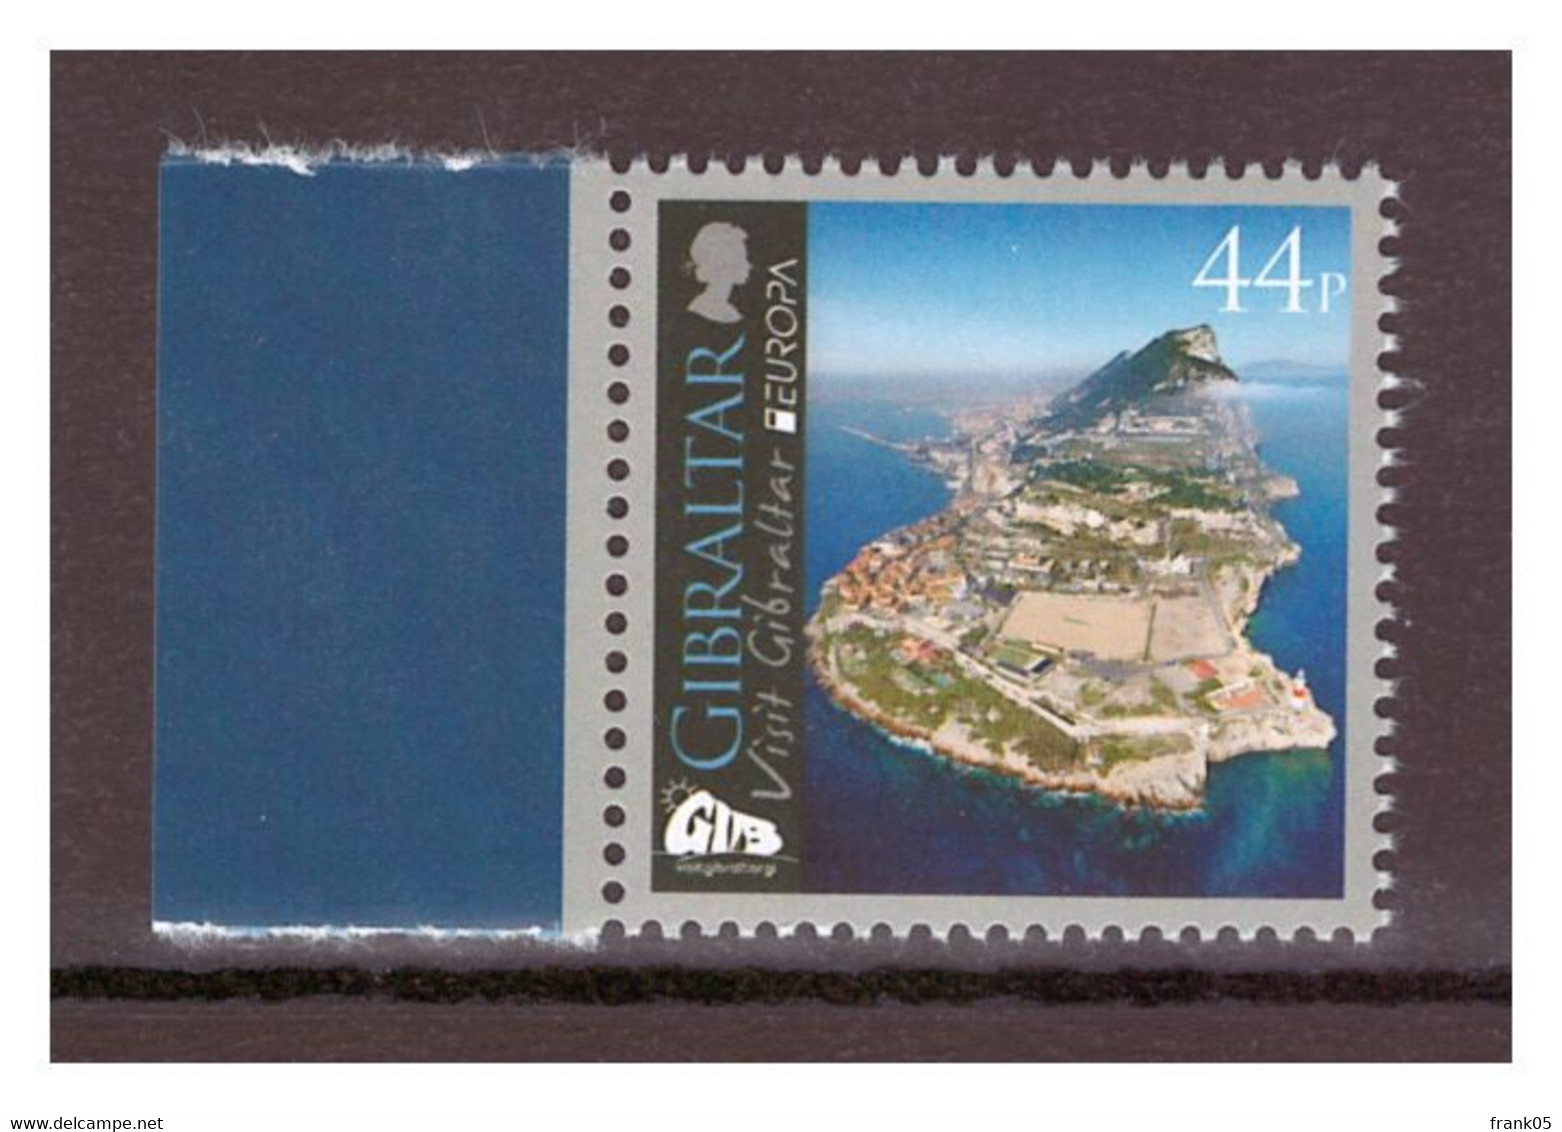 Gibraltar 2012 44p Value EUROPA Michel Nr. 1485 ** - 2012